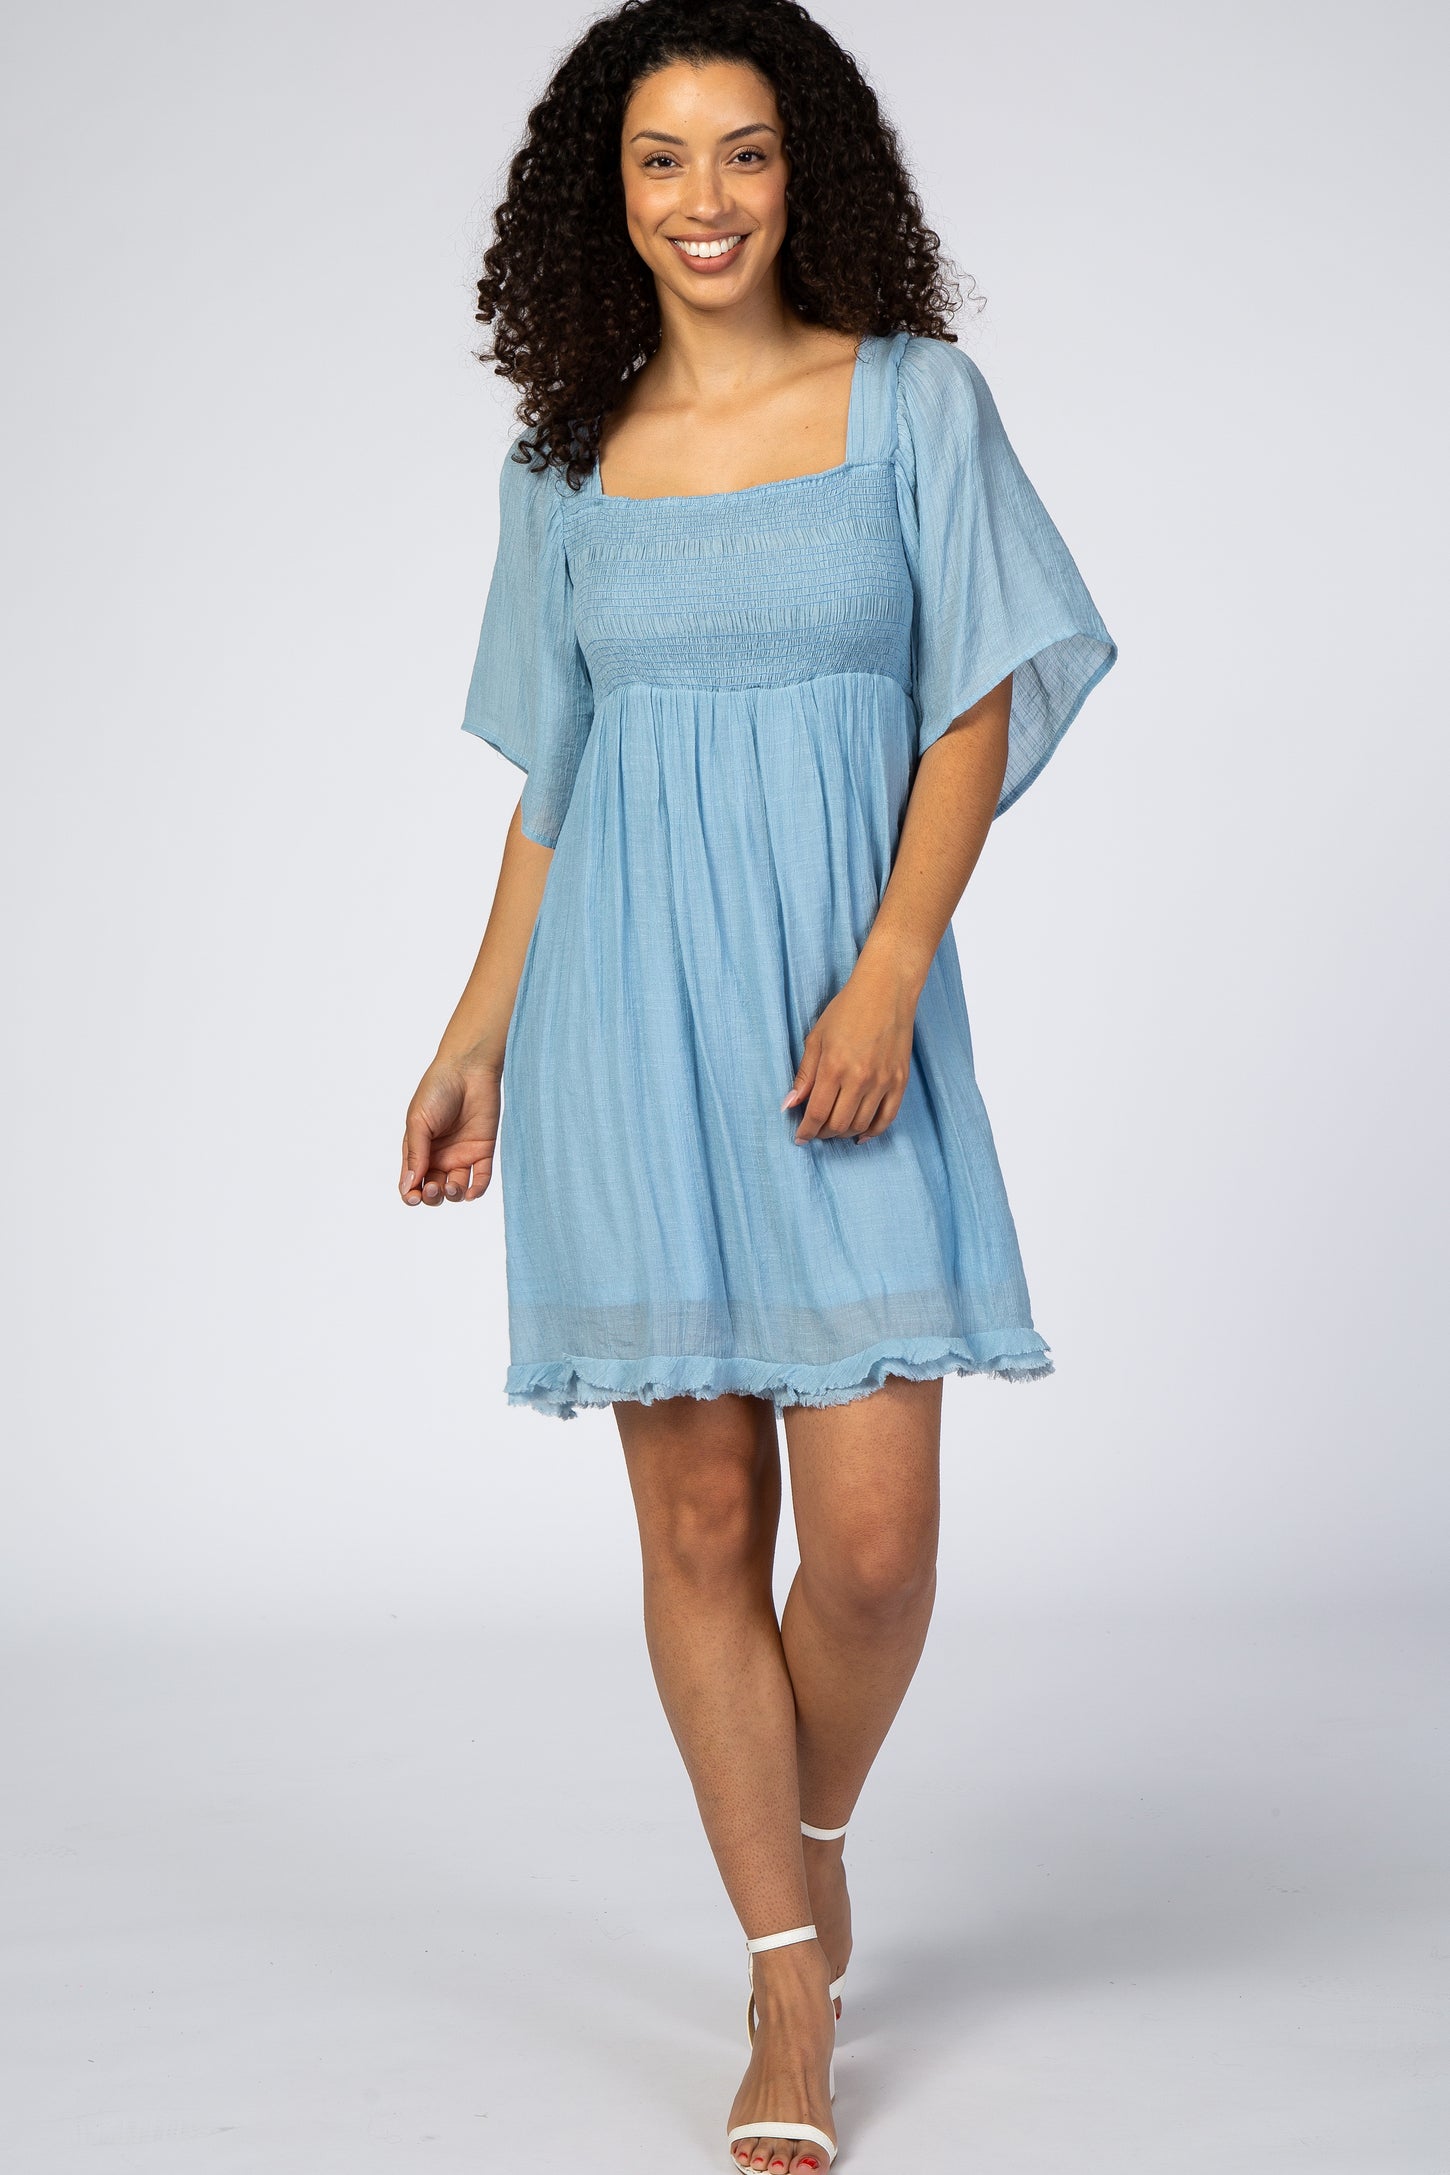 Light Blue Smocked Short Sleeve Maternity Dress